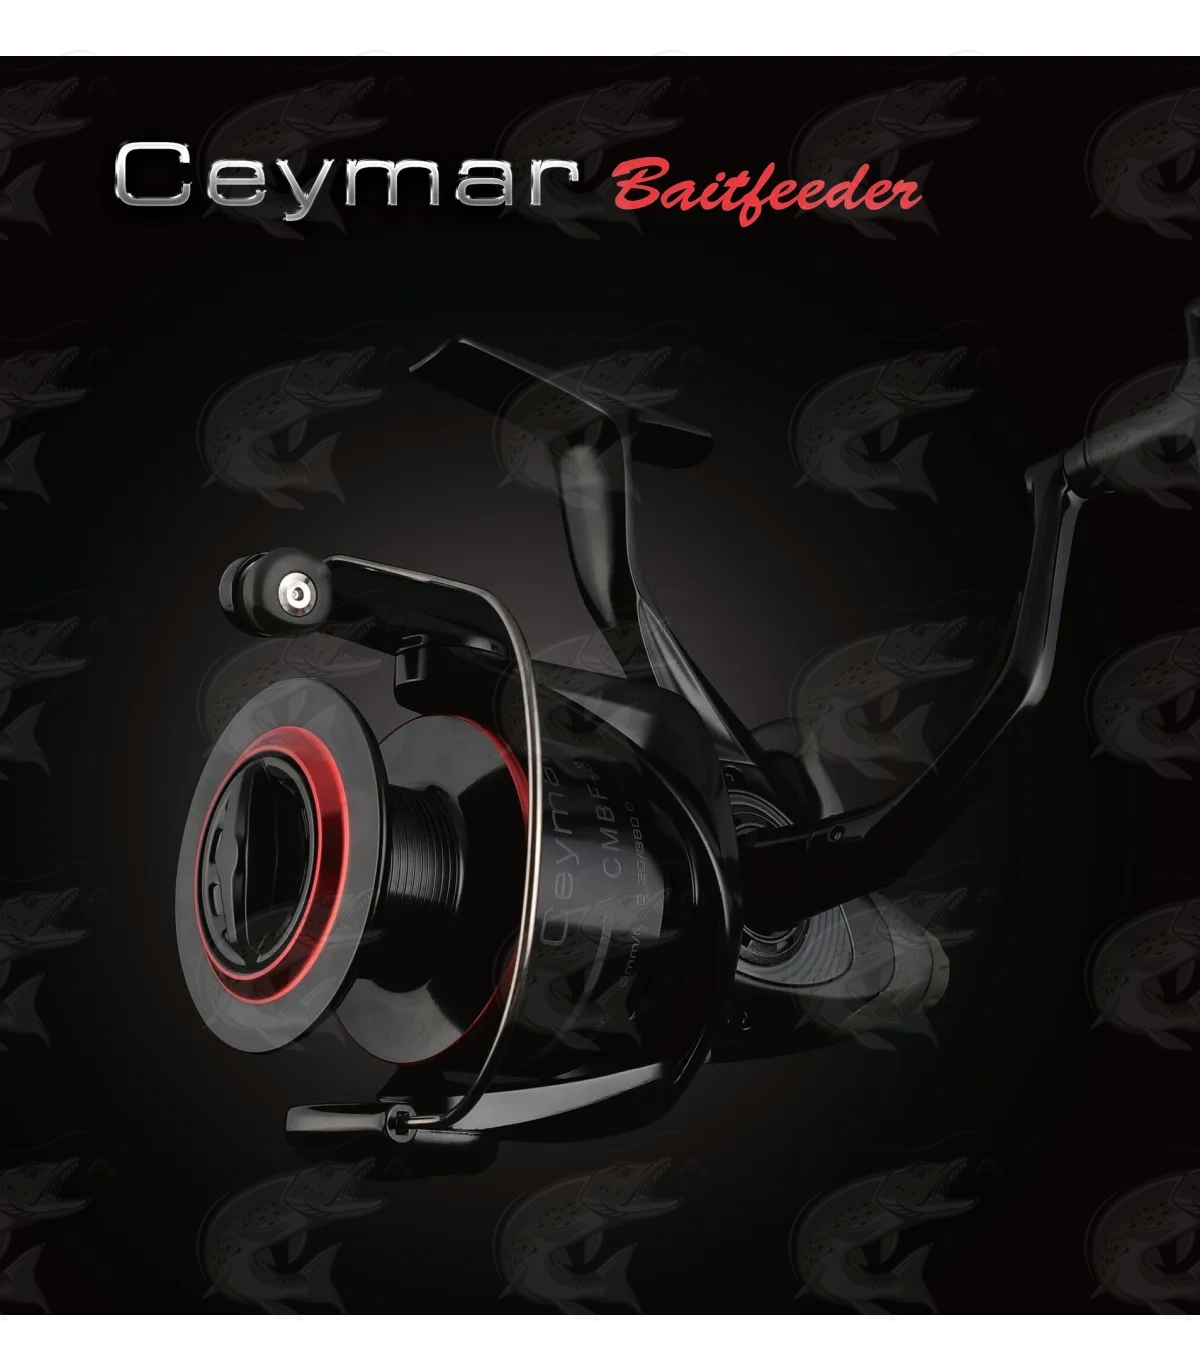 Okuma Ceymar Baitfeeder /Light weight/ Carp reel with free spool system 